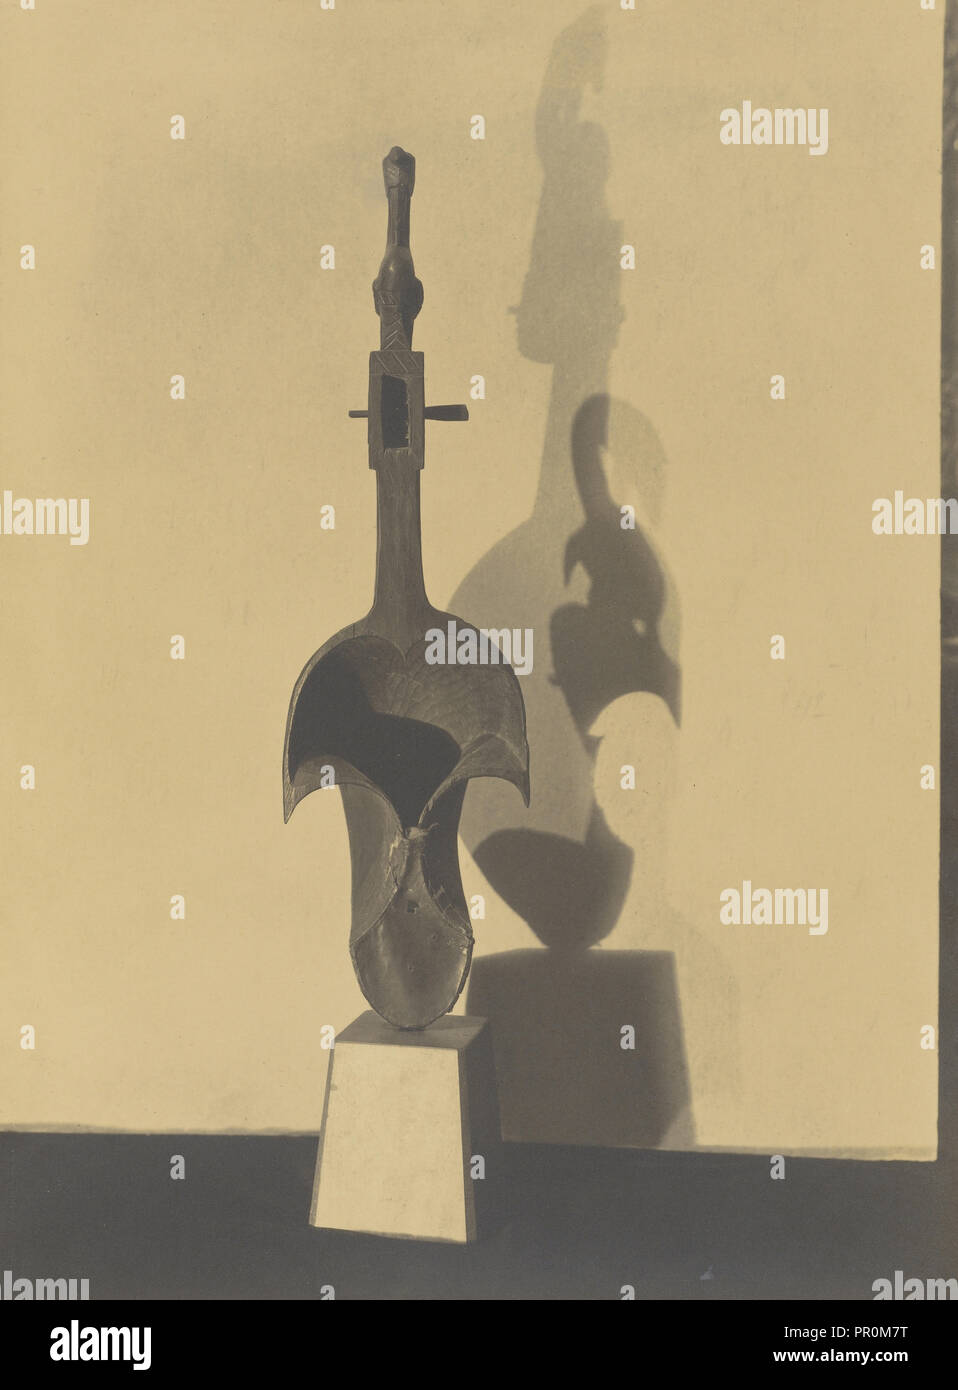 African Musical Instrument; Charles Sheeler, American, 1883 - 1965, New York, New York, United States; negative 1917; print Stock Photo